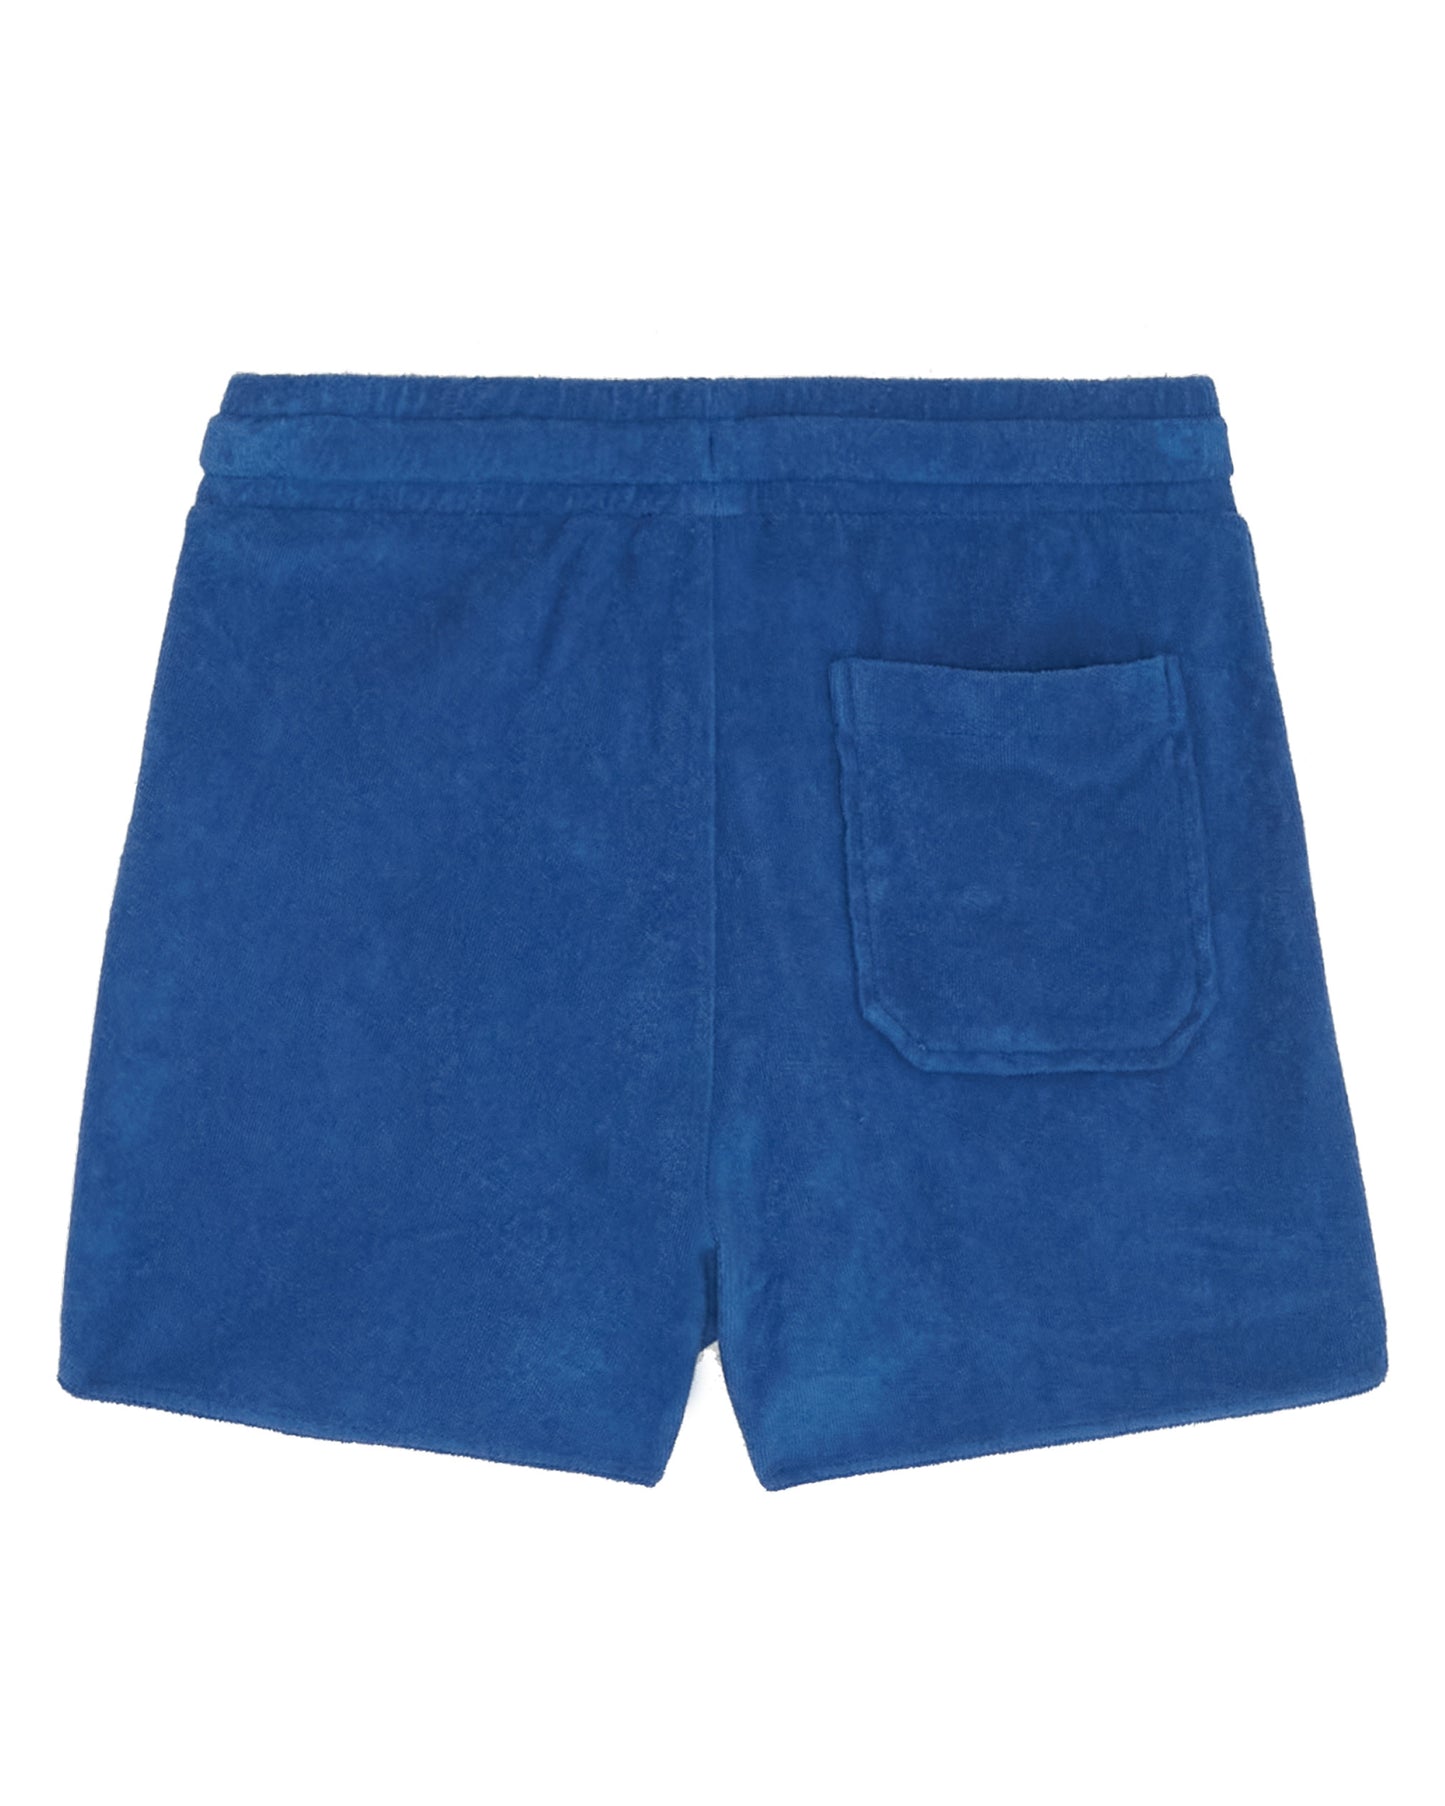 Titia Girls' Blue Terry Cotton Fleece Shorts